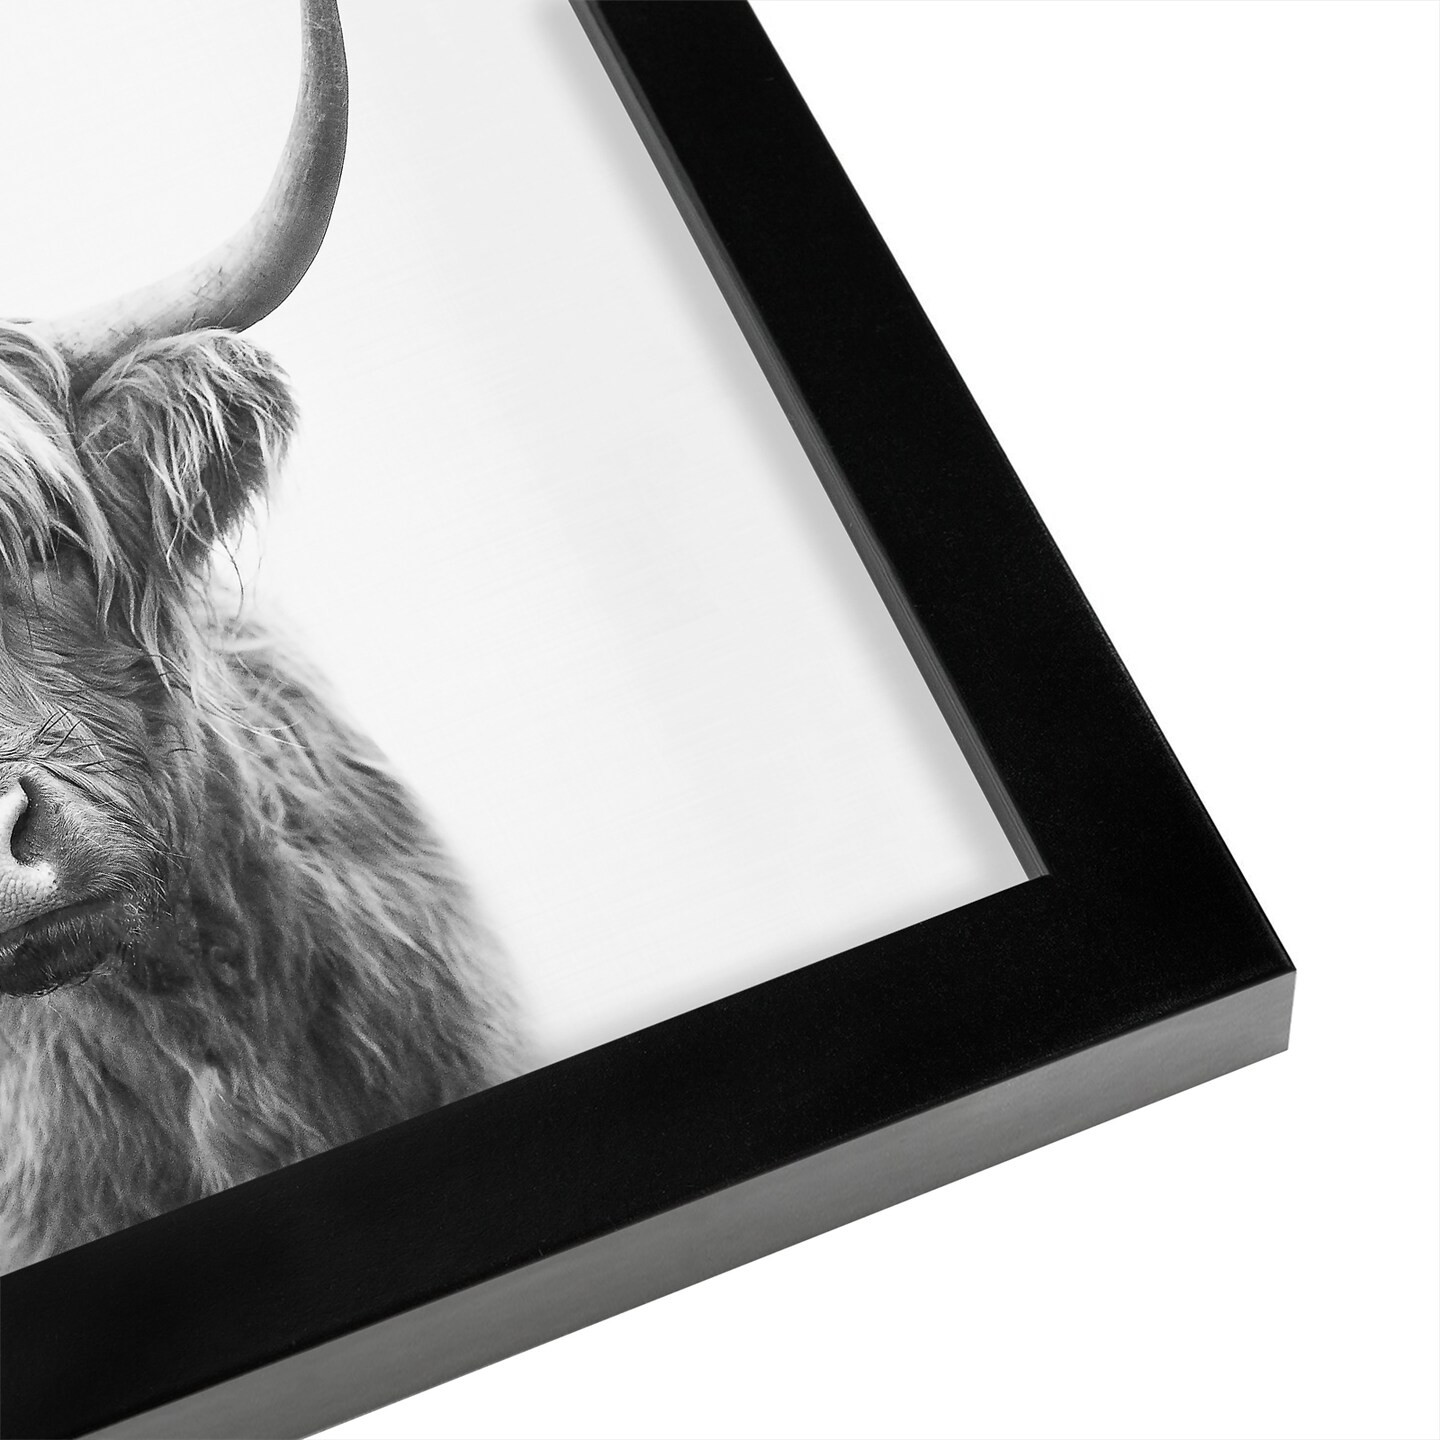 Highland Bull by Sisi and Seb Framed Print - 8x10 - Americanflat